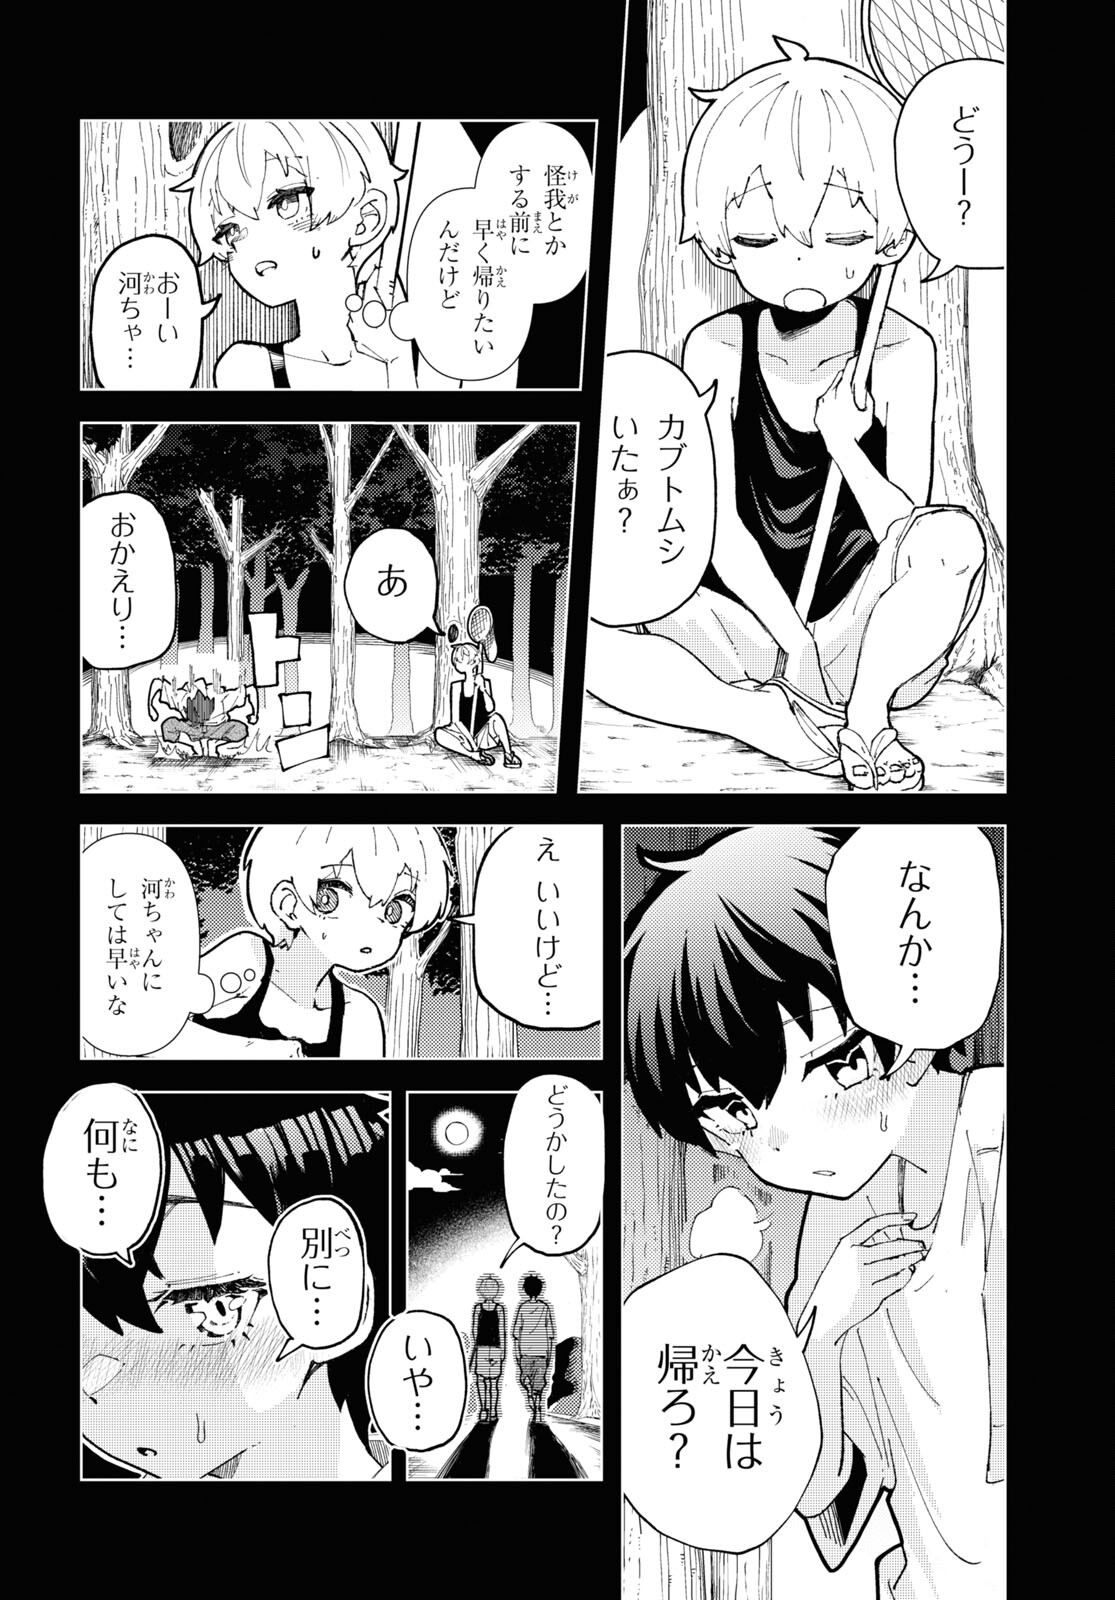 Garuru Girl - Chapter 1 - Page 13